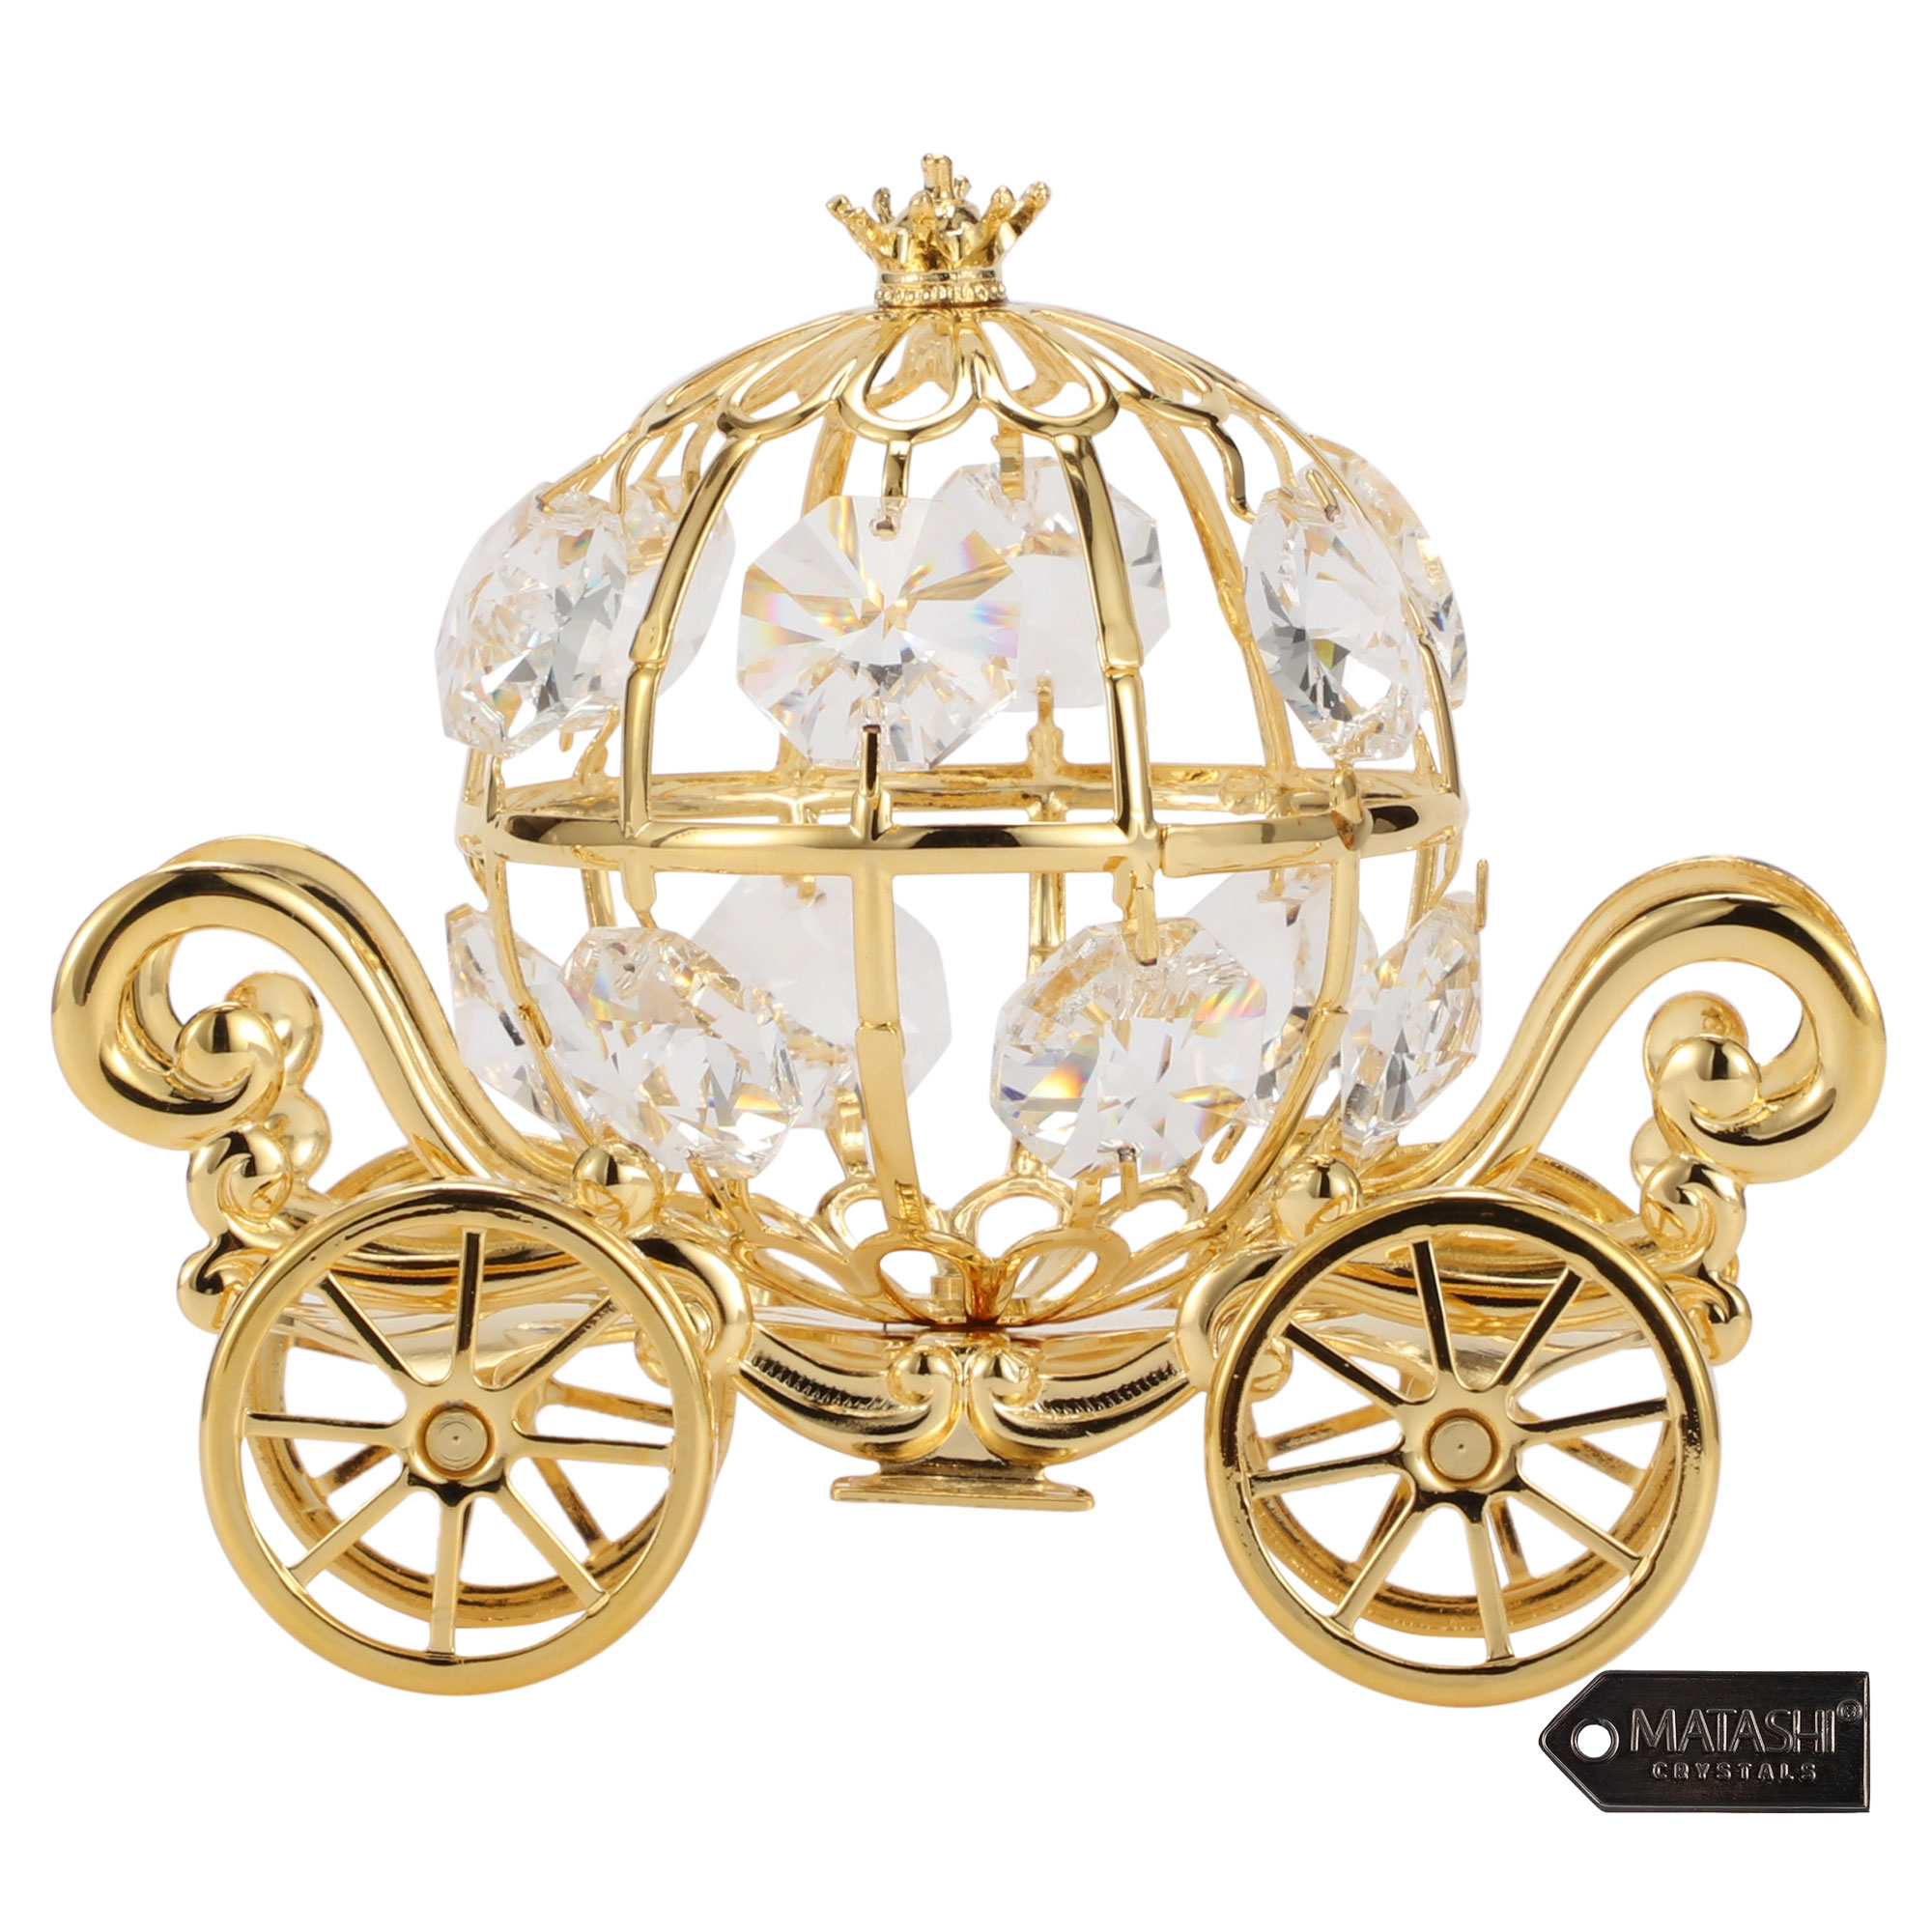 Matashi 24K Gold Plated Crystal Studded Small Cinderella Pumpkin Coach Ornament